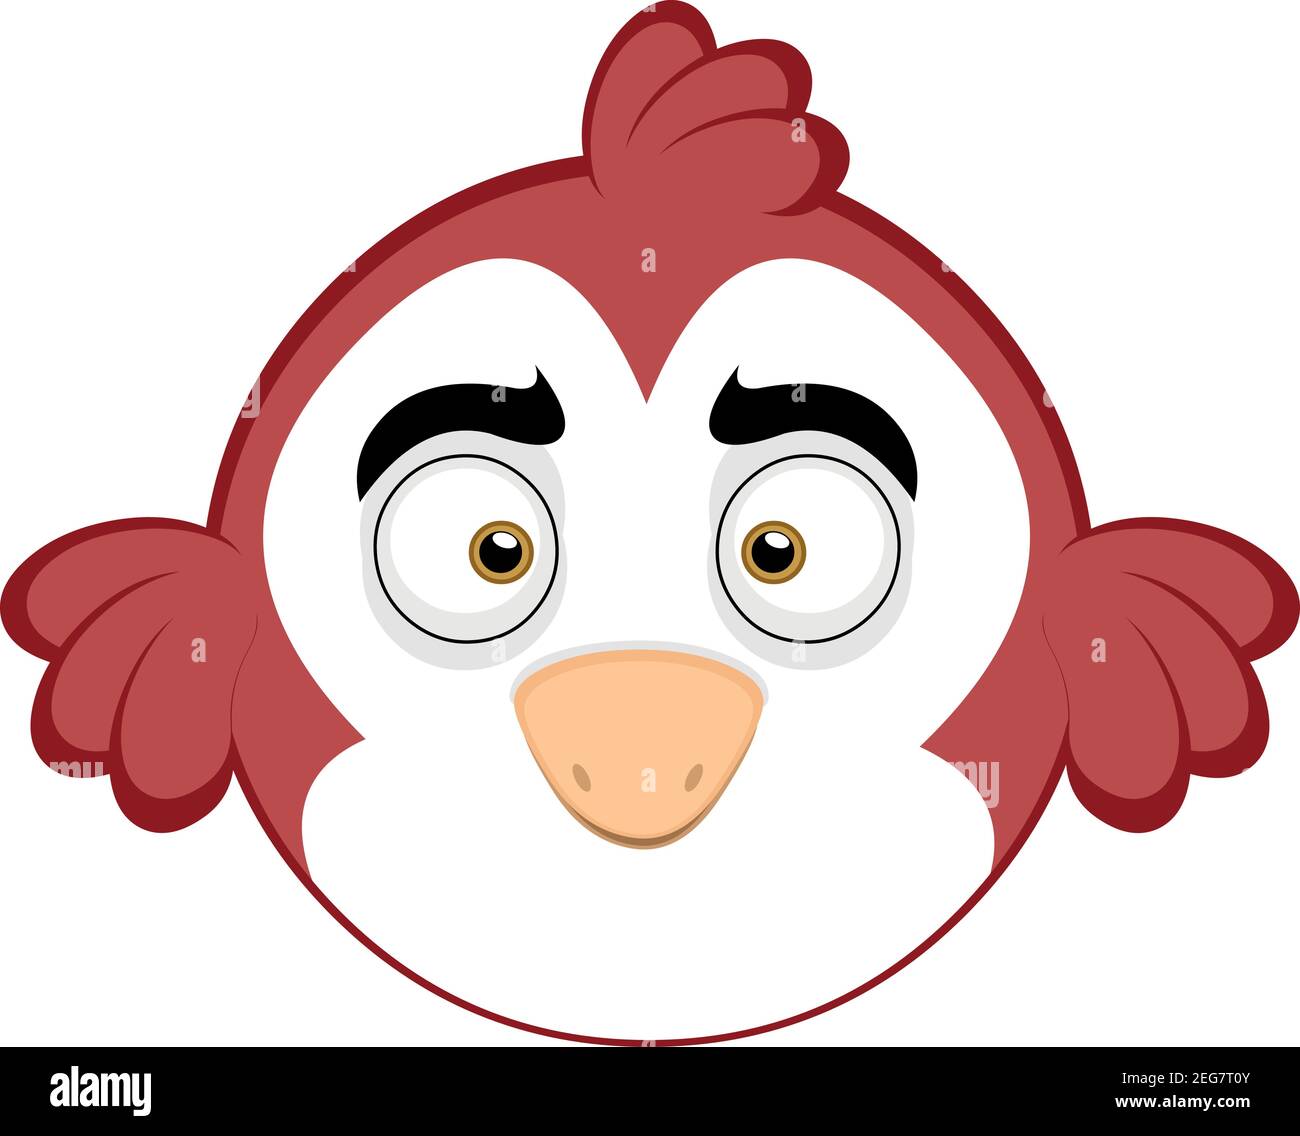 Vector emoticon illustration of a cute red cartoon bird character Stock Vector